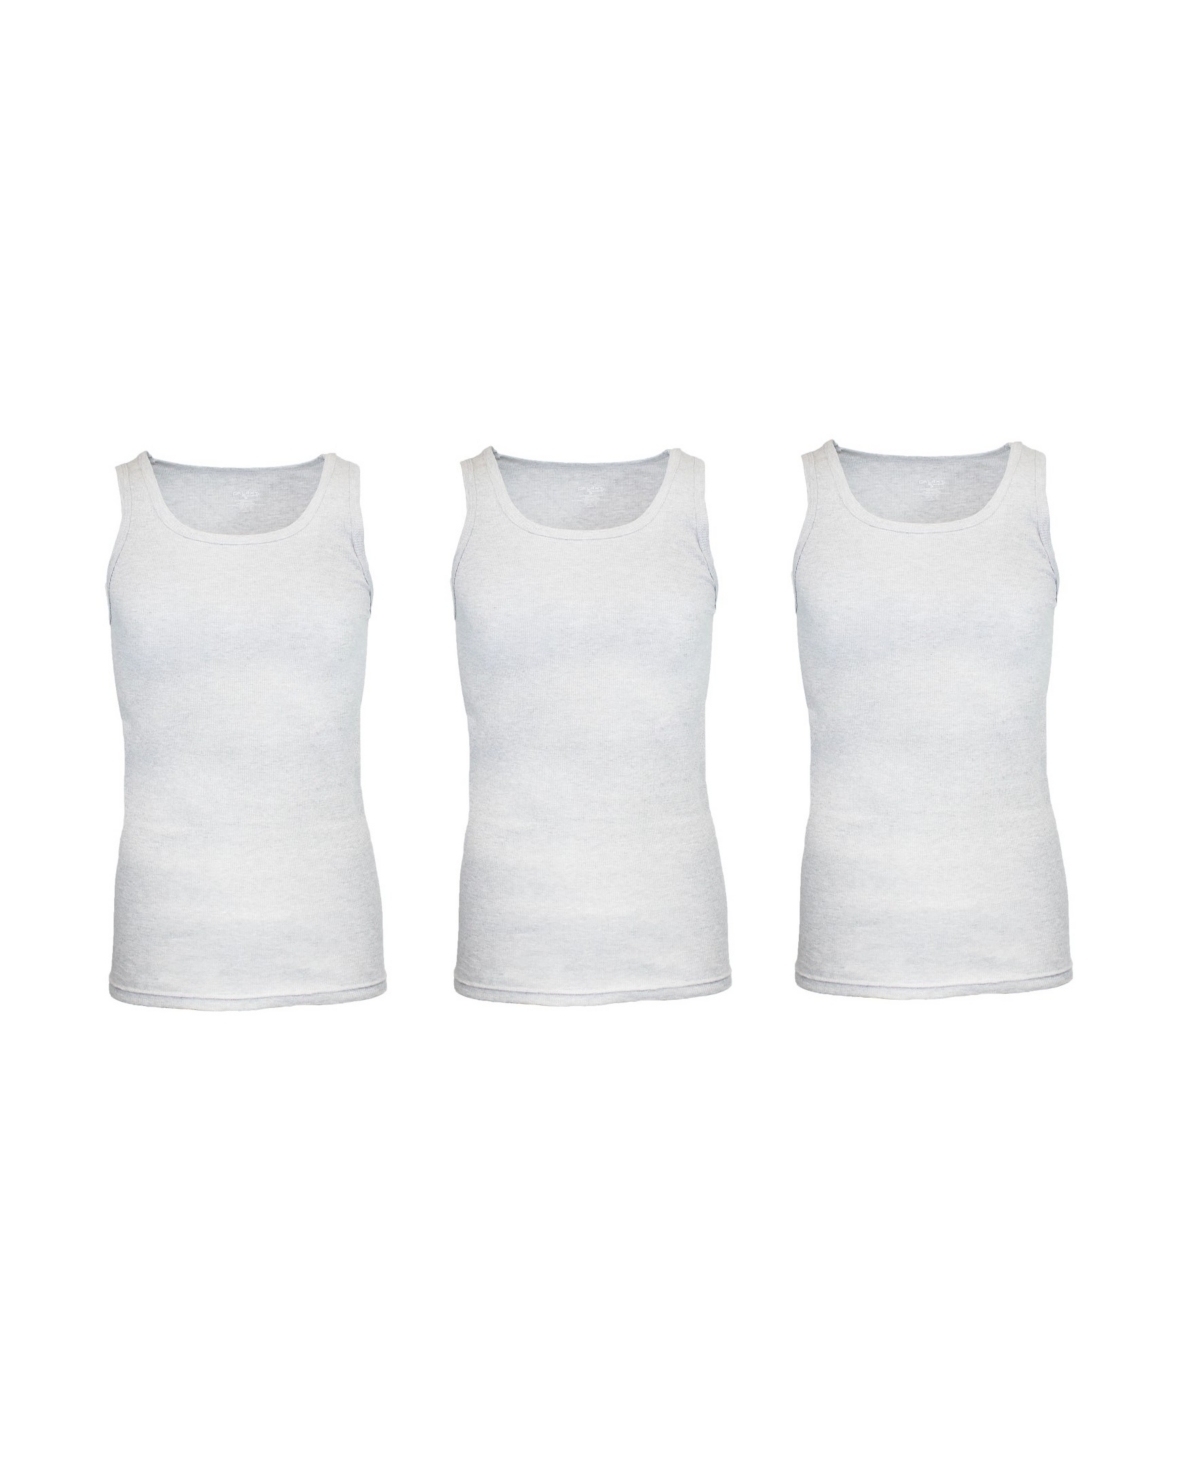 Men's 3-Pack Premium Cotton Blend Tank Tops - White